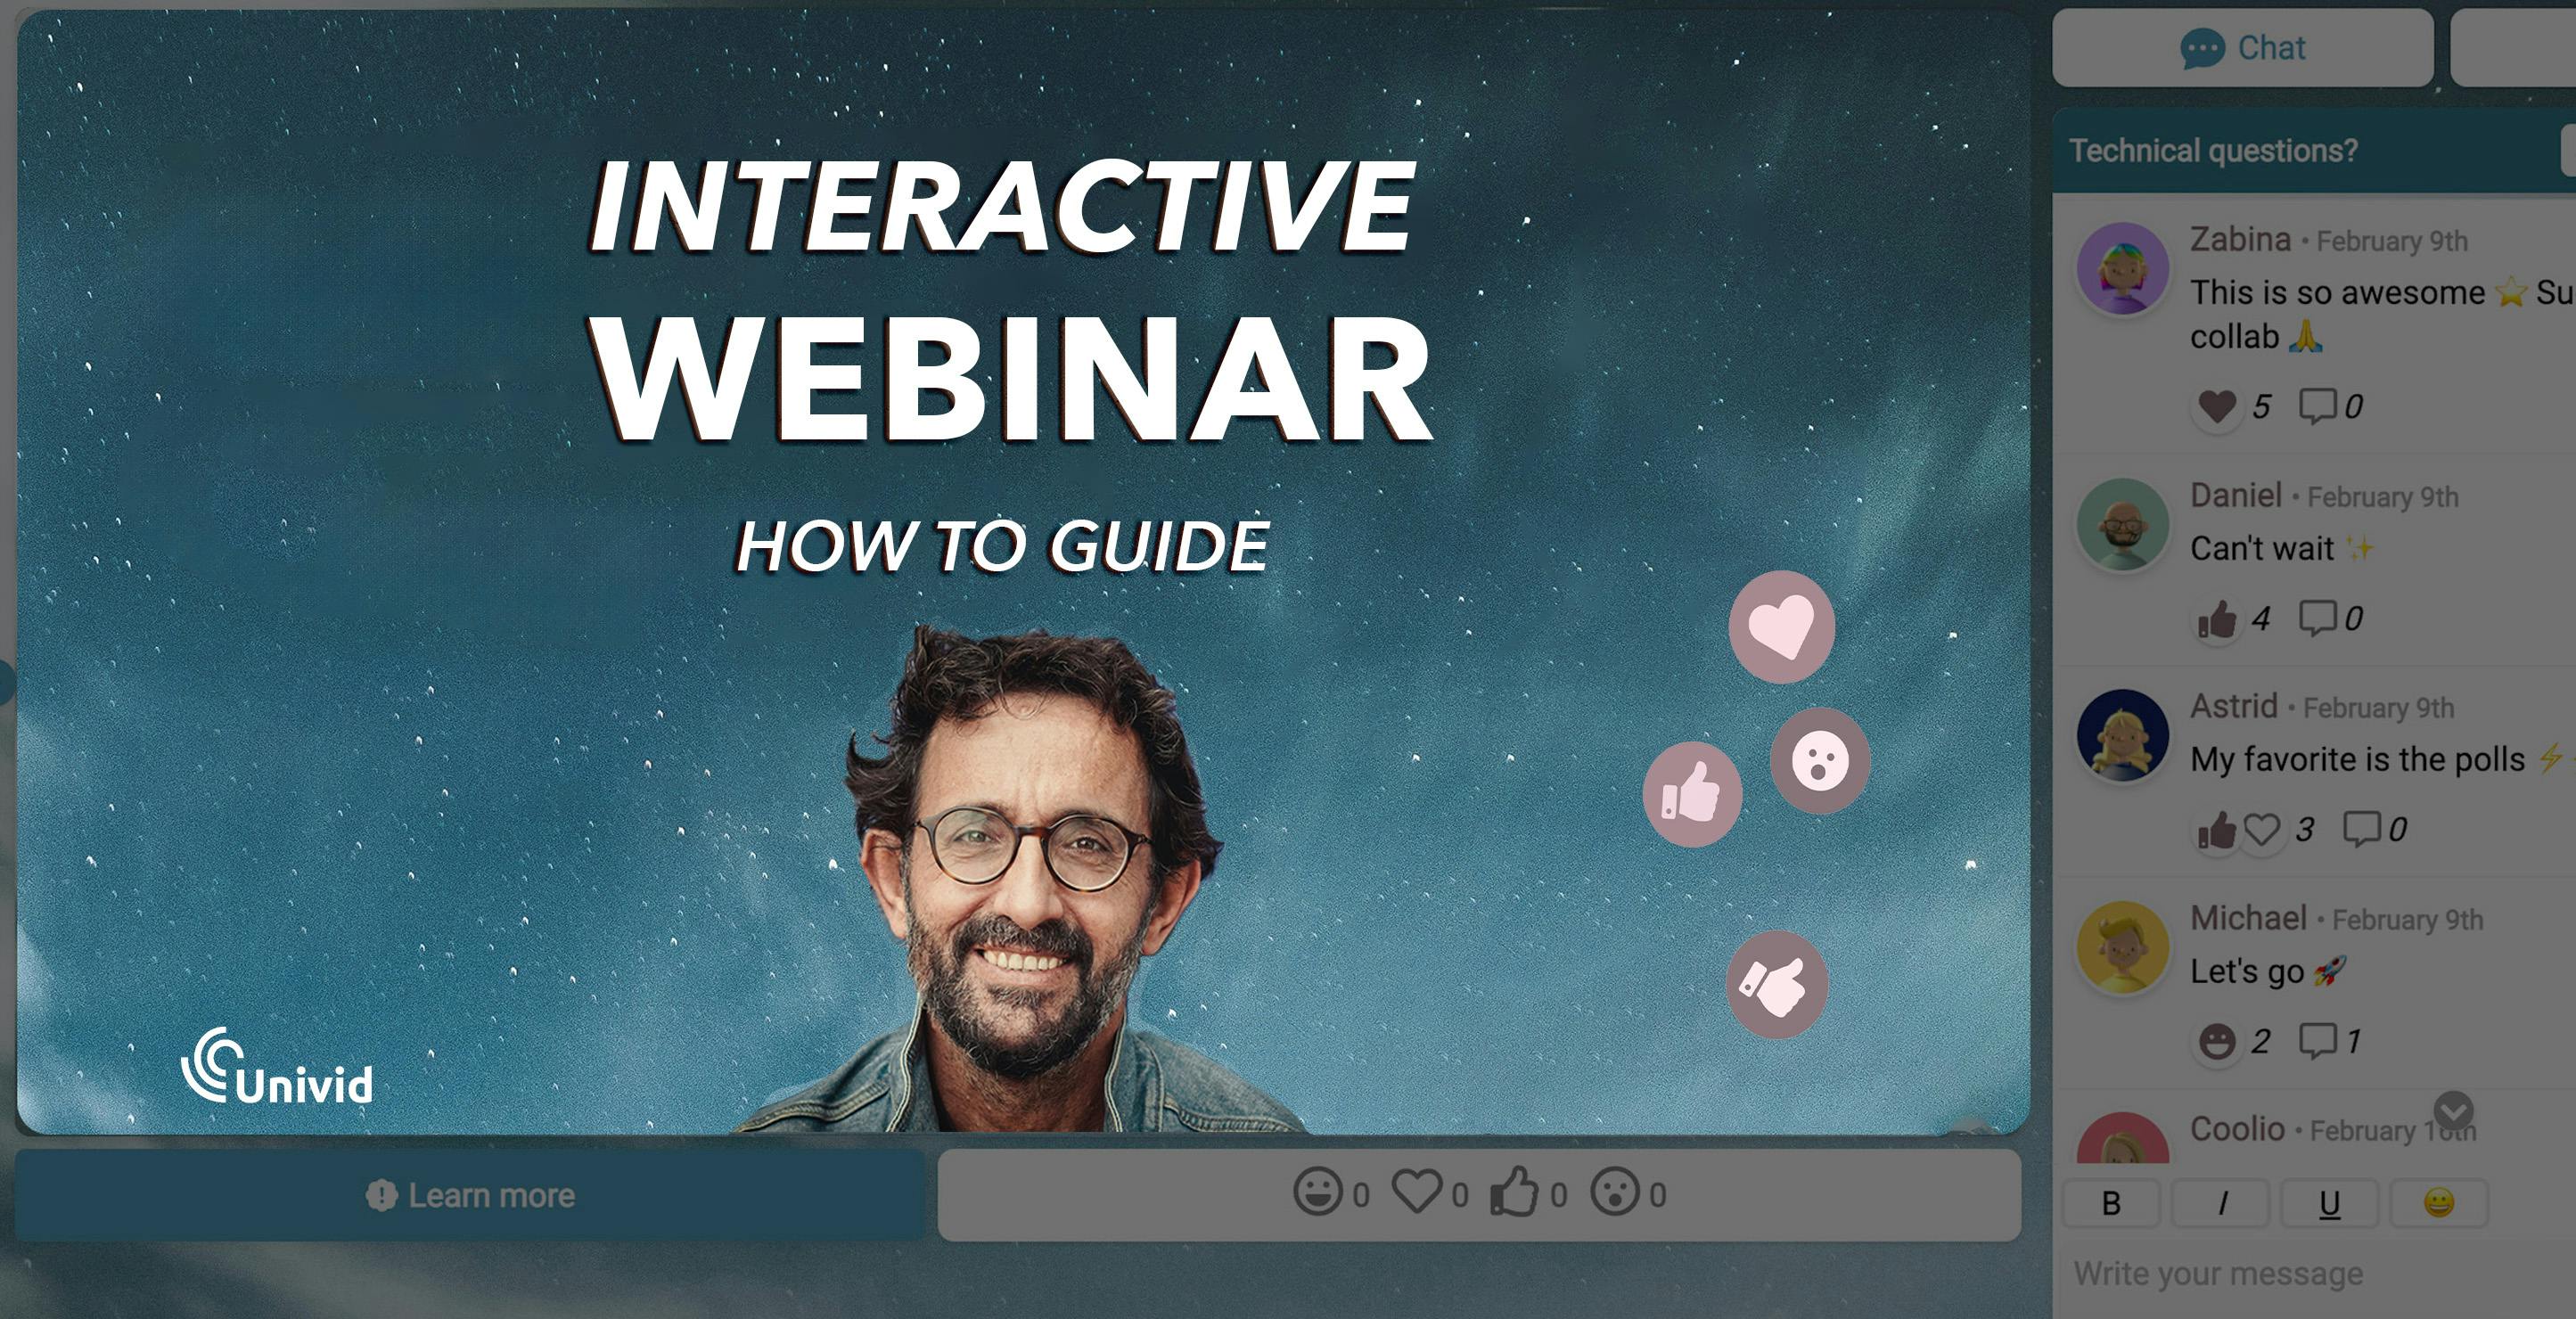 How to make a webinar more interactive - The webinar interaction guide